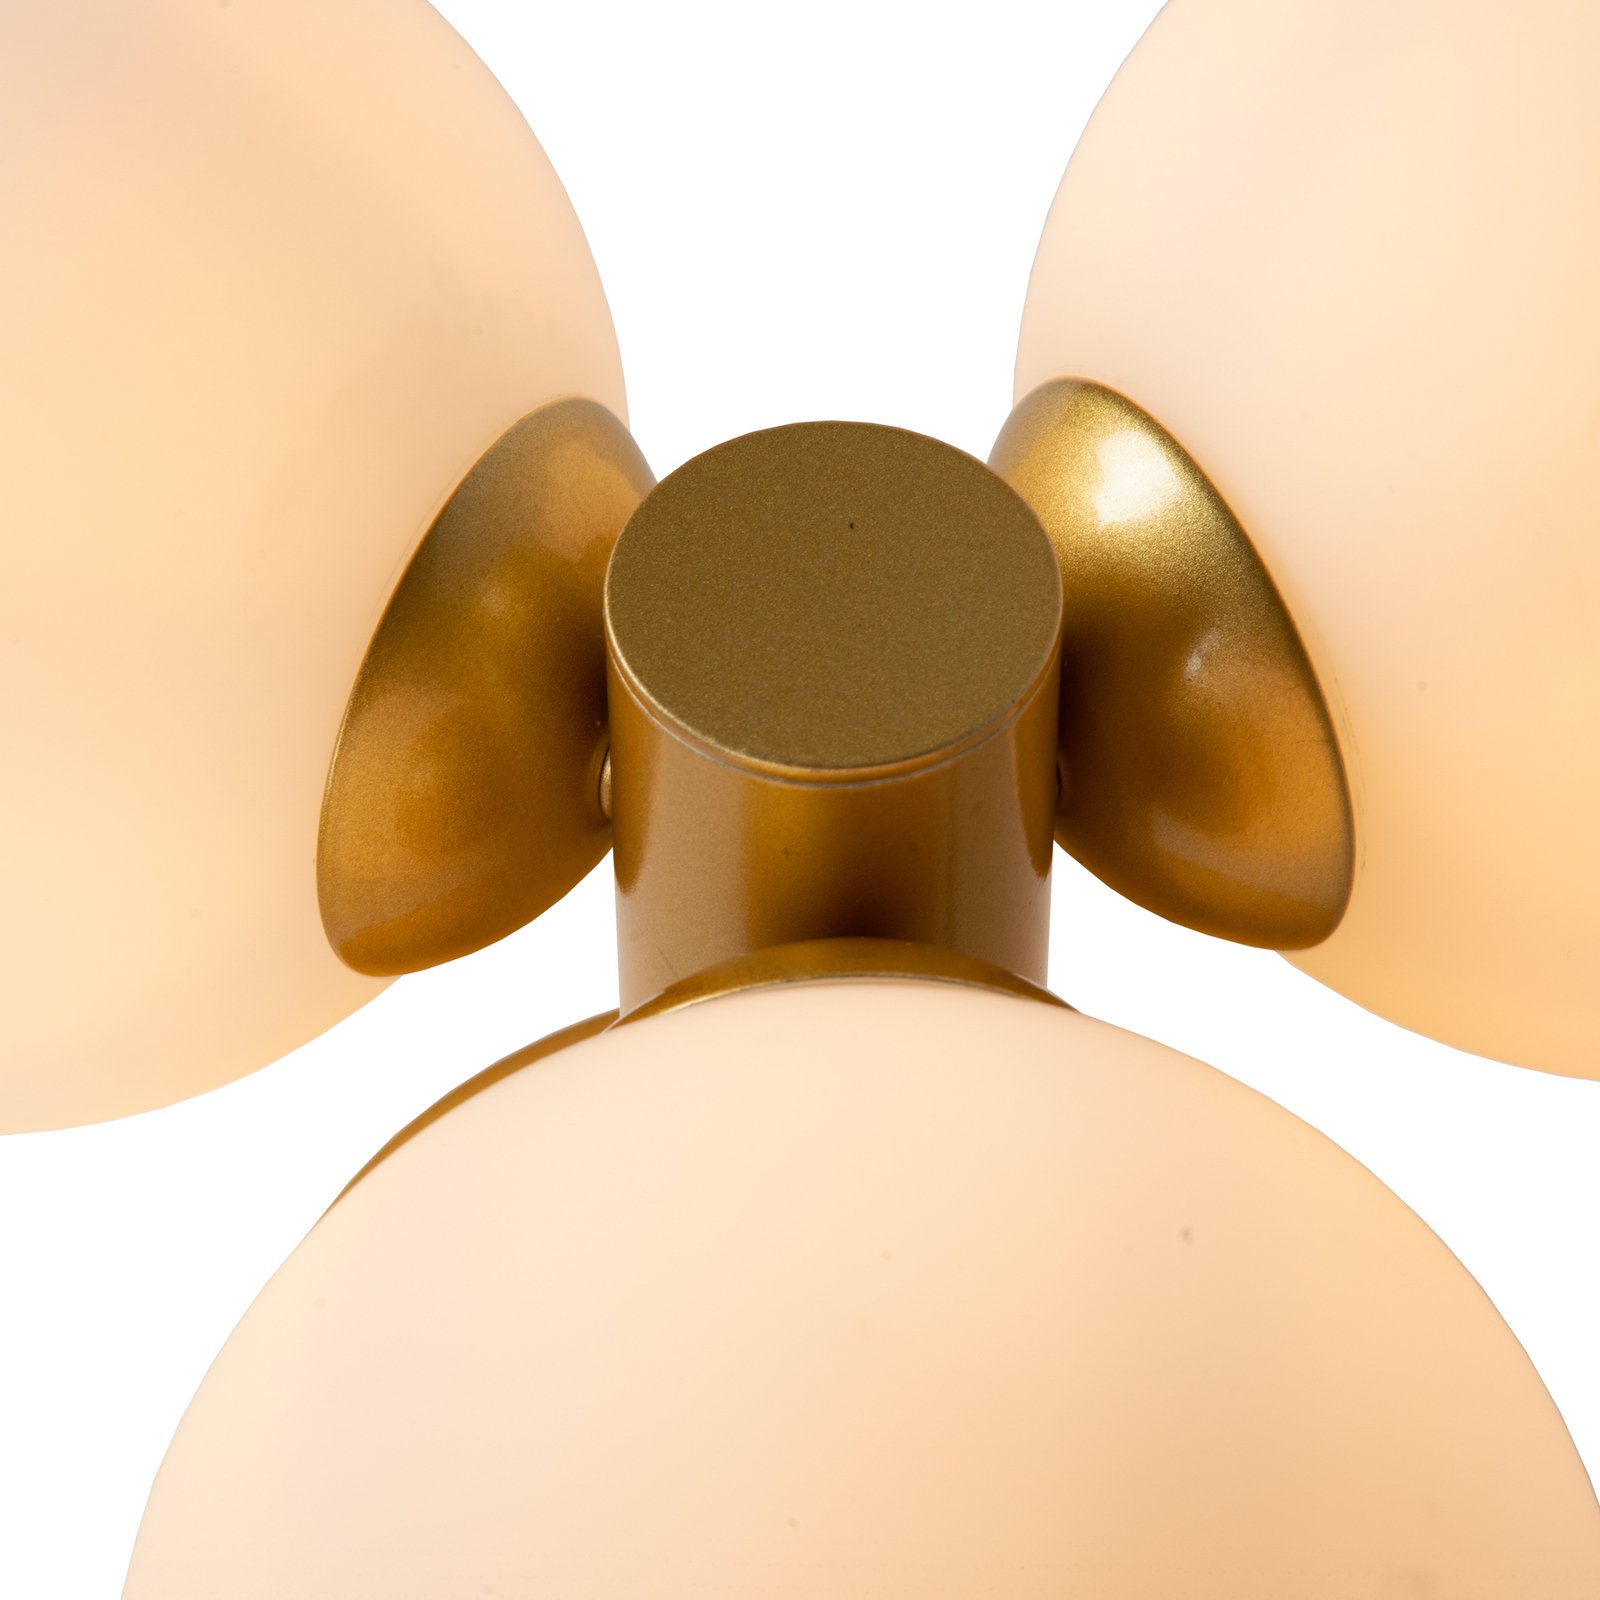 Badkamer-plafondlamp Trudy, 3-lamps mat goud/opaal